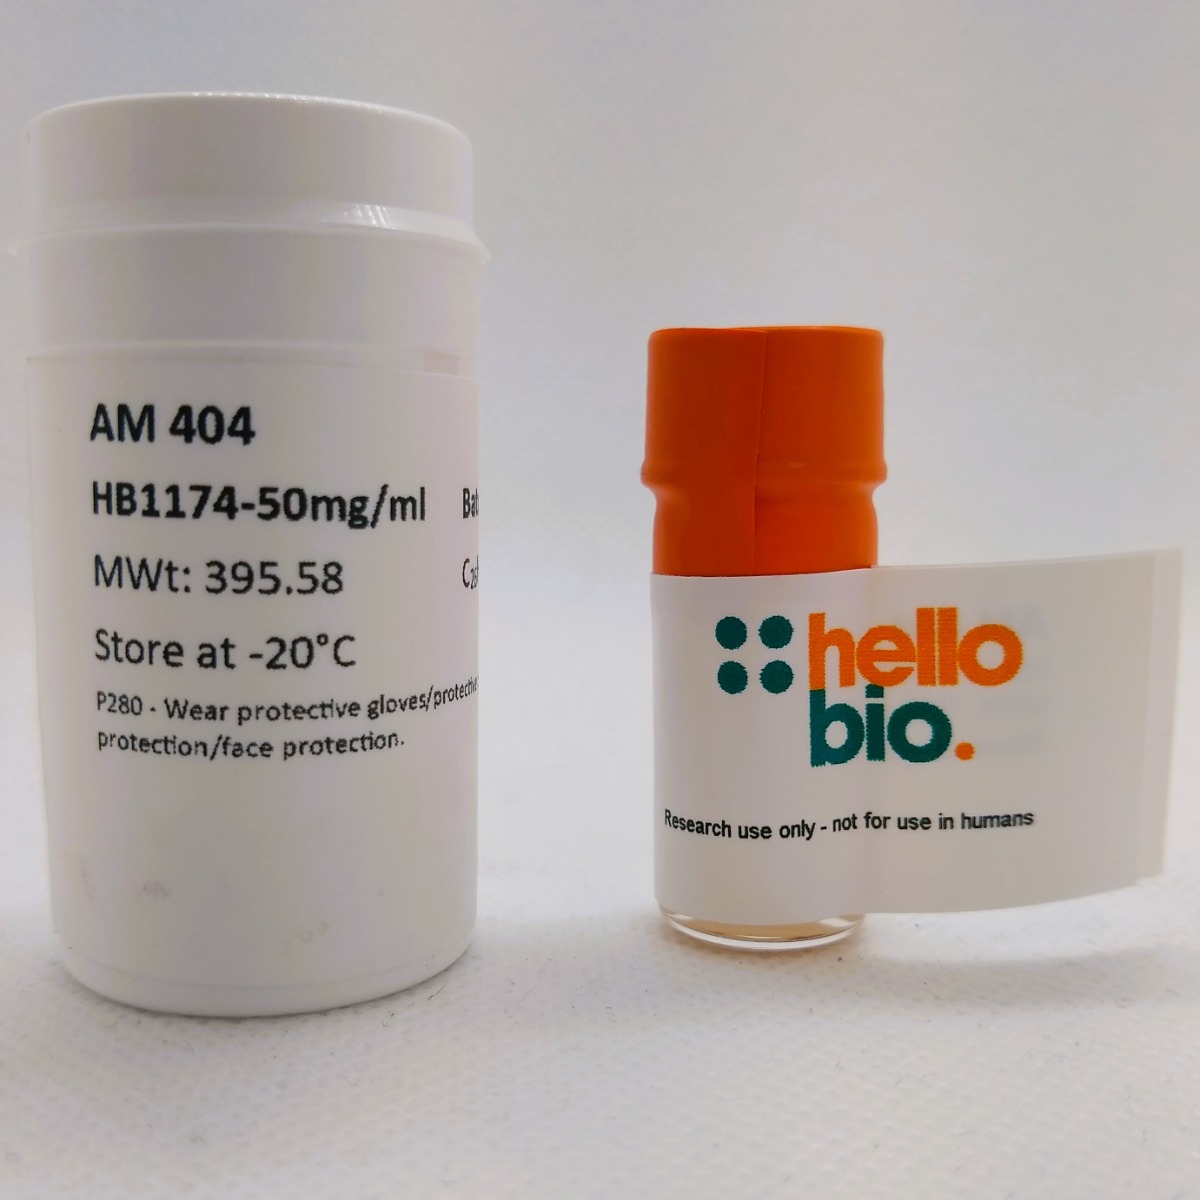 AM 404 product vial image | Hello Bio